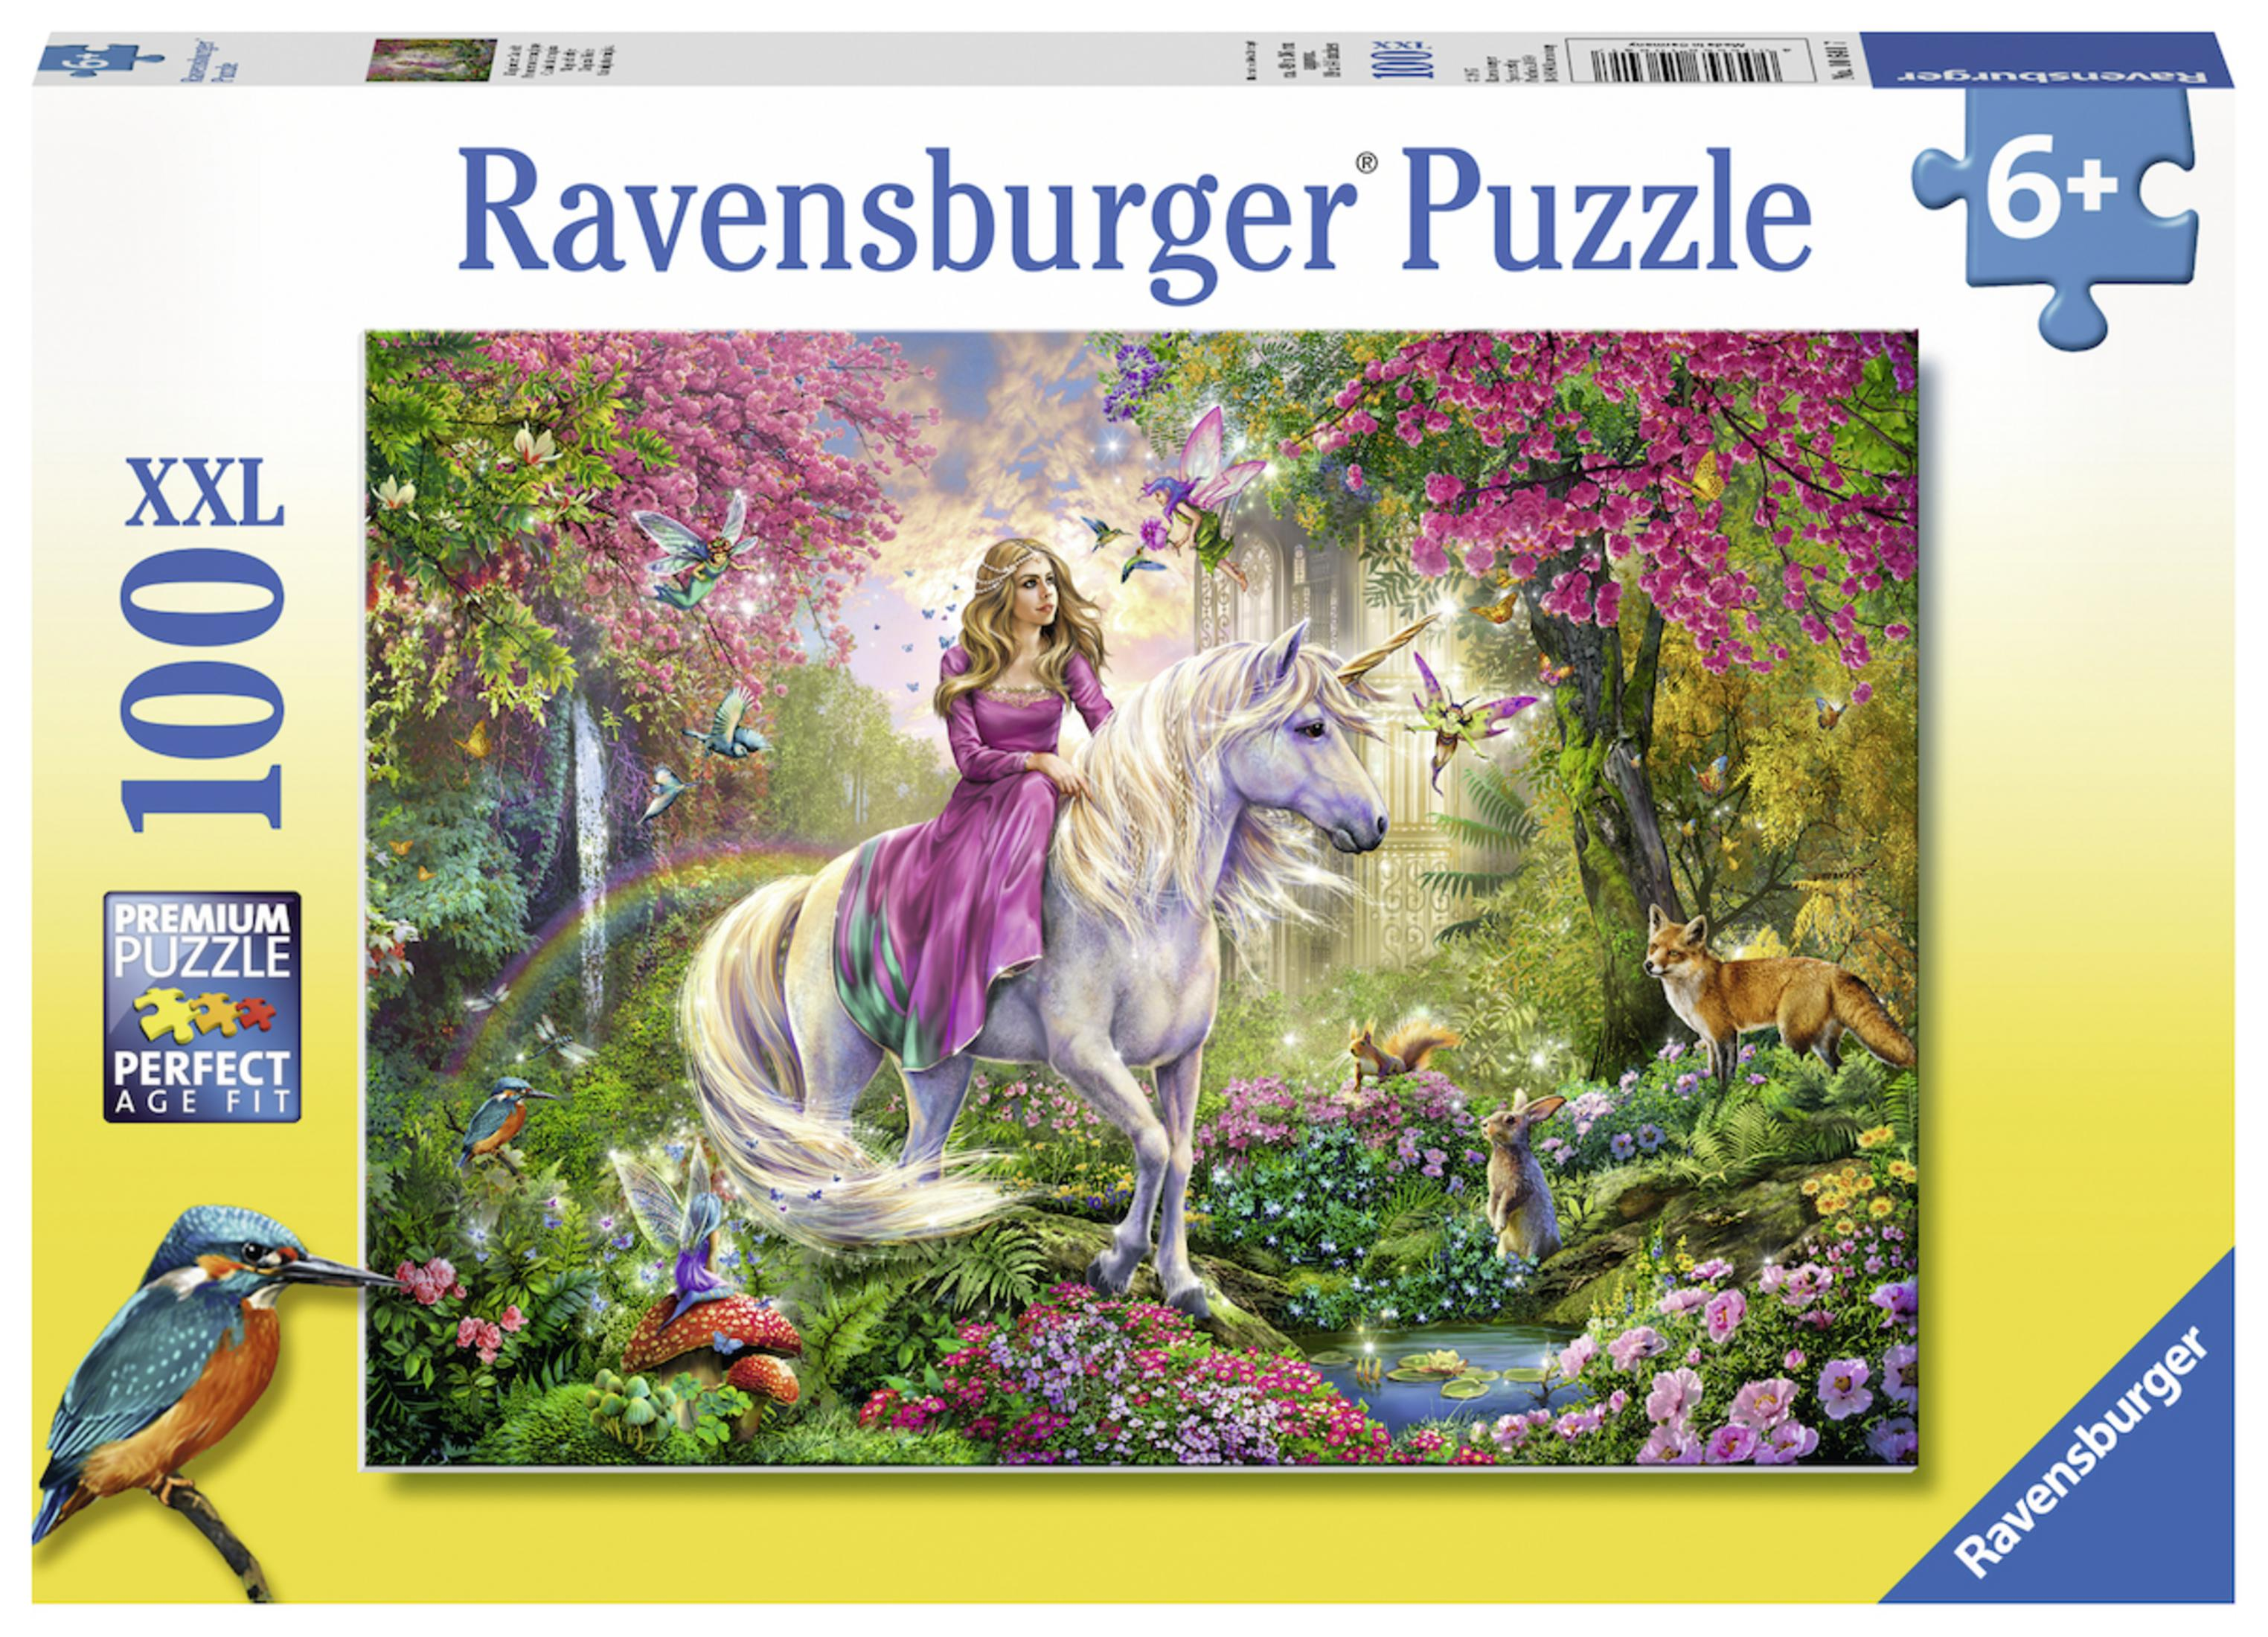 AUSRITT 10641 MAGISCHER RAVENSBURGER Puzzle